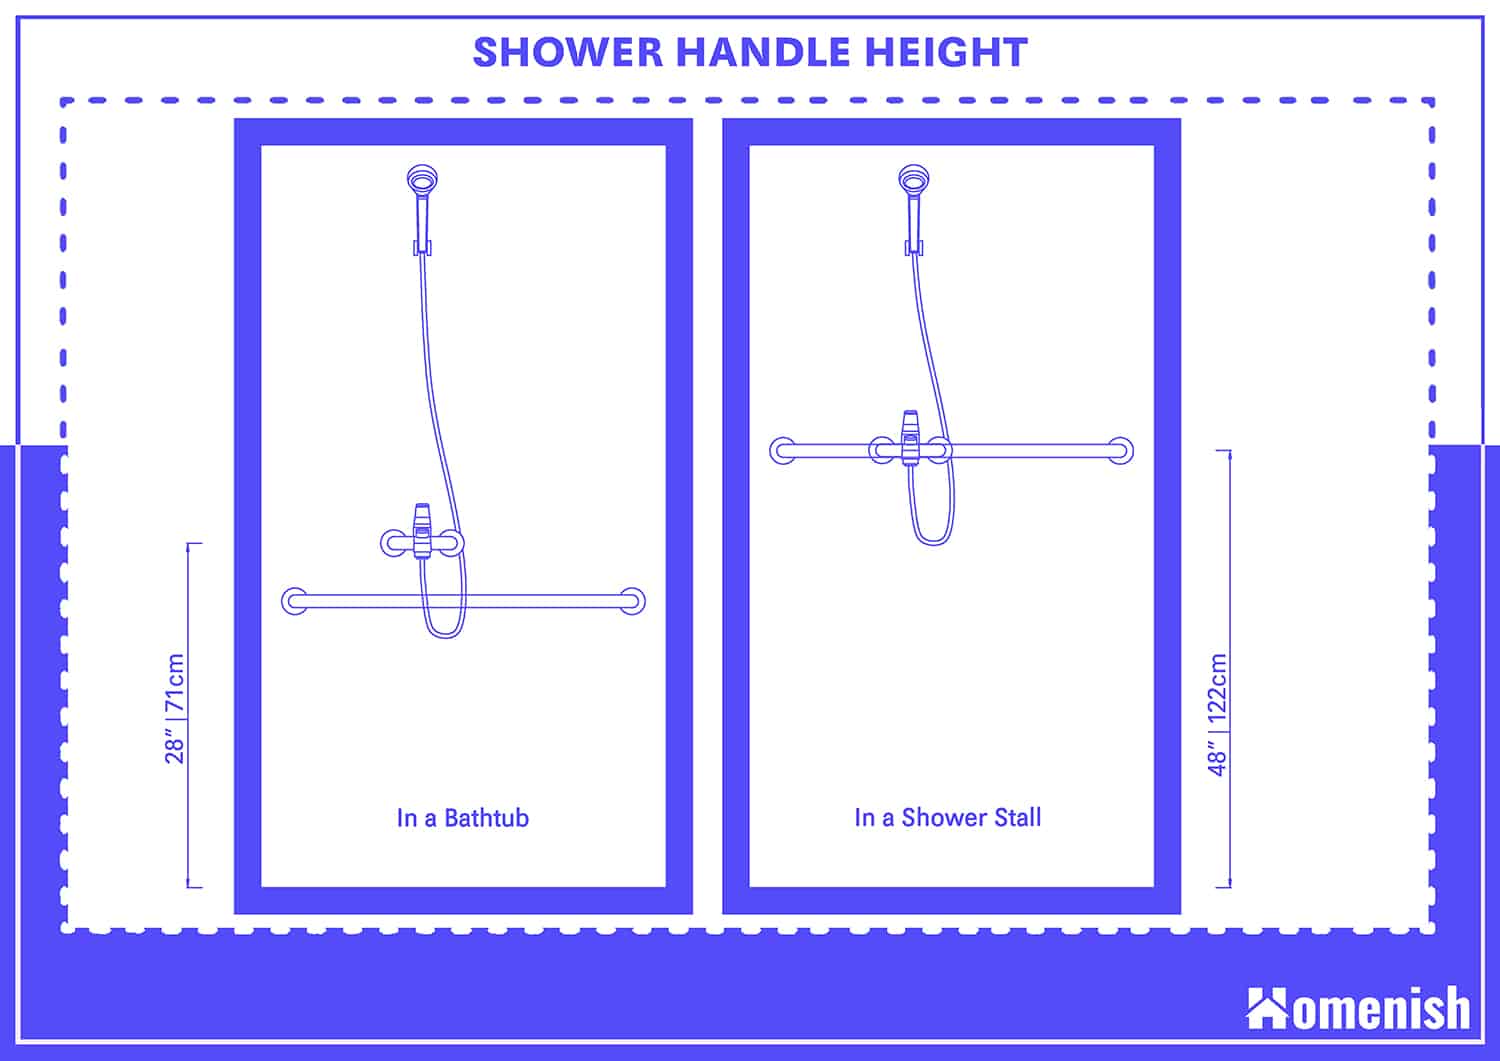 Standard Height of Shower Handle